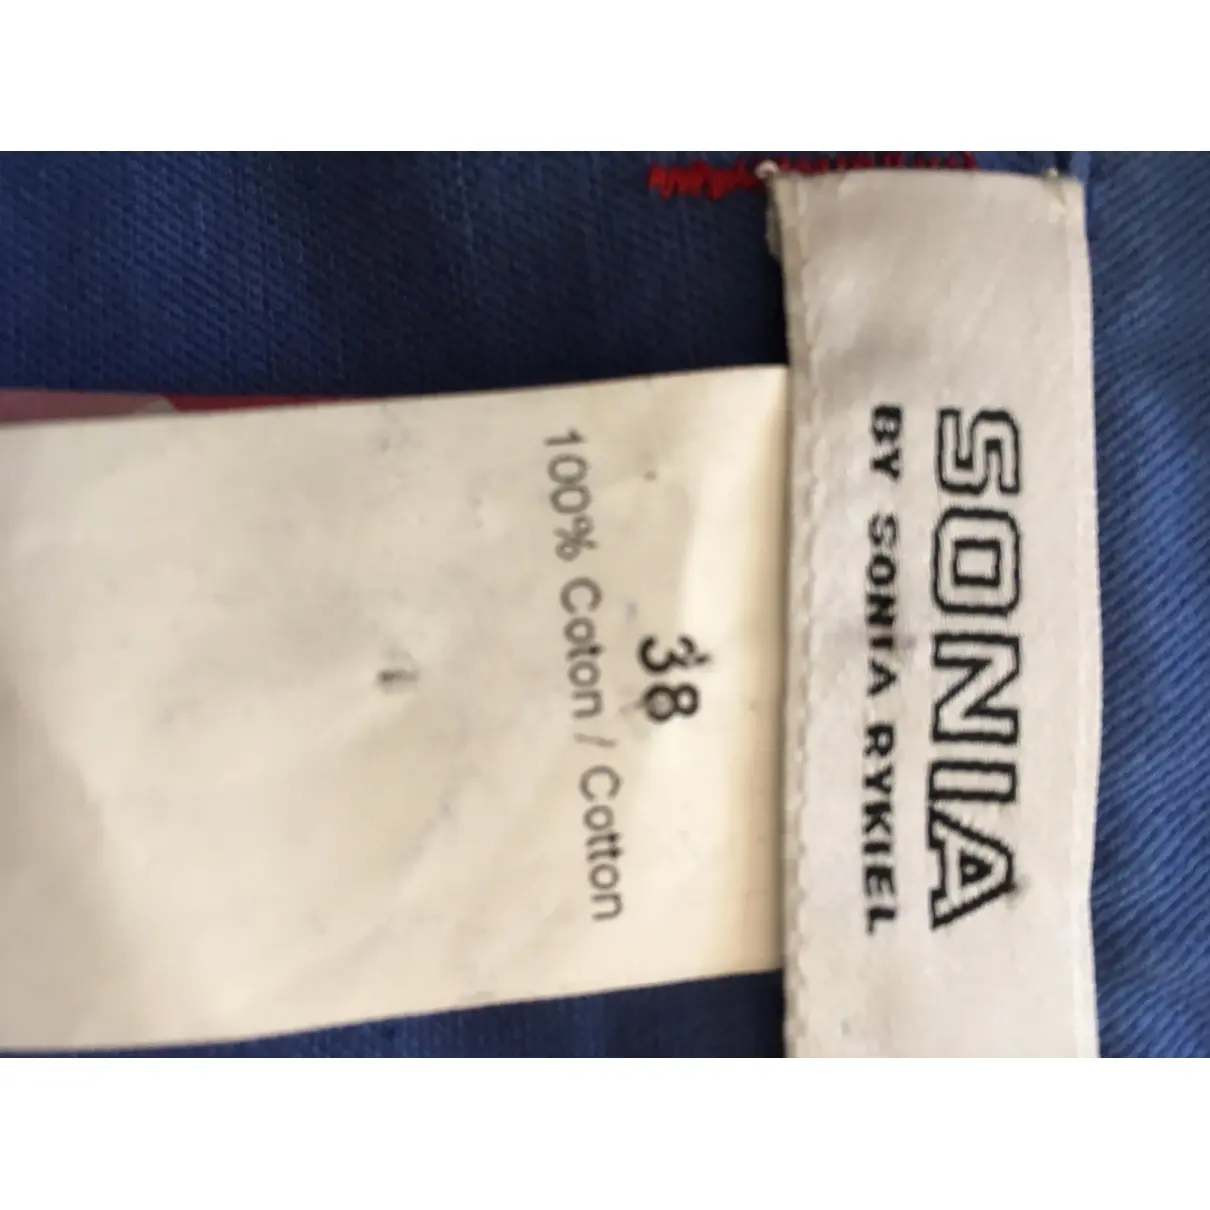 Buy Sonia by Sonia Rykiel Short vest online